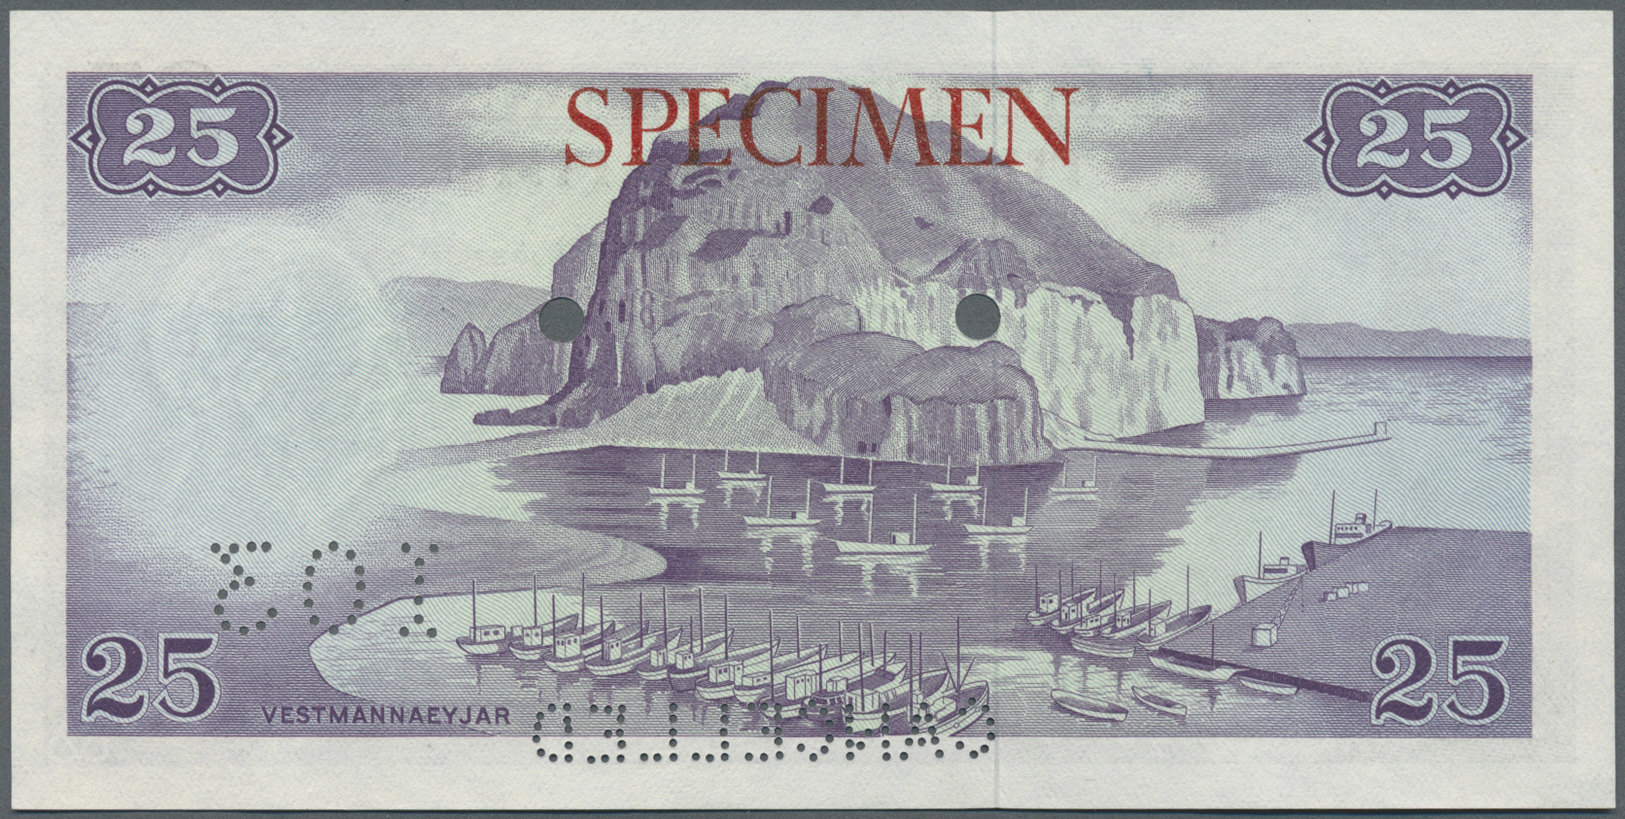 01027 Iceland / Island: 25 Kronur 1957 Specimen P. 39s, Red Specimen Overprint, Cancellation Hole, "Cancelled" Perforati - Iceland